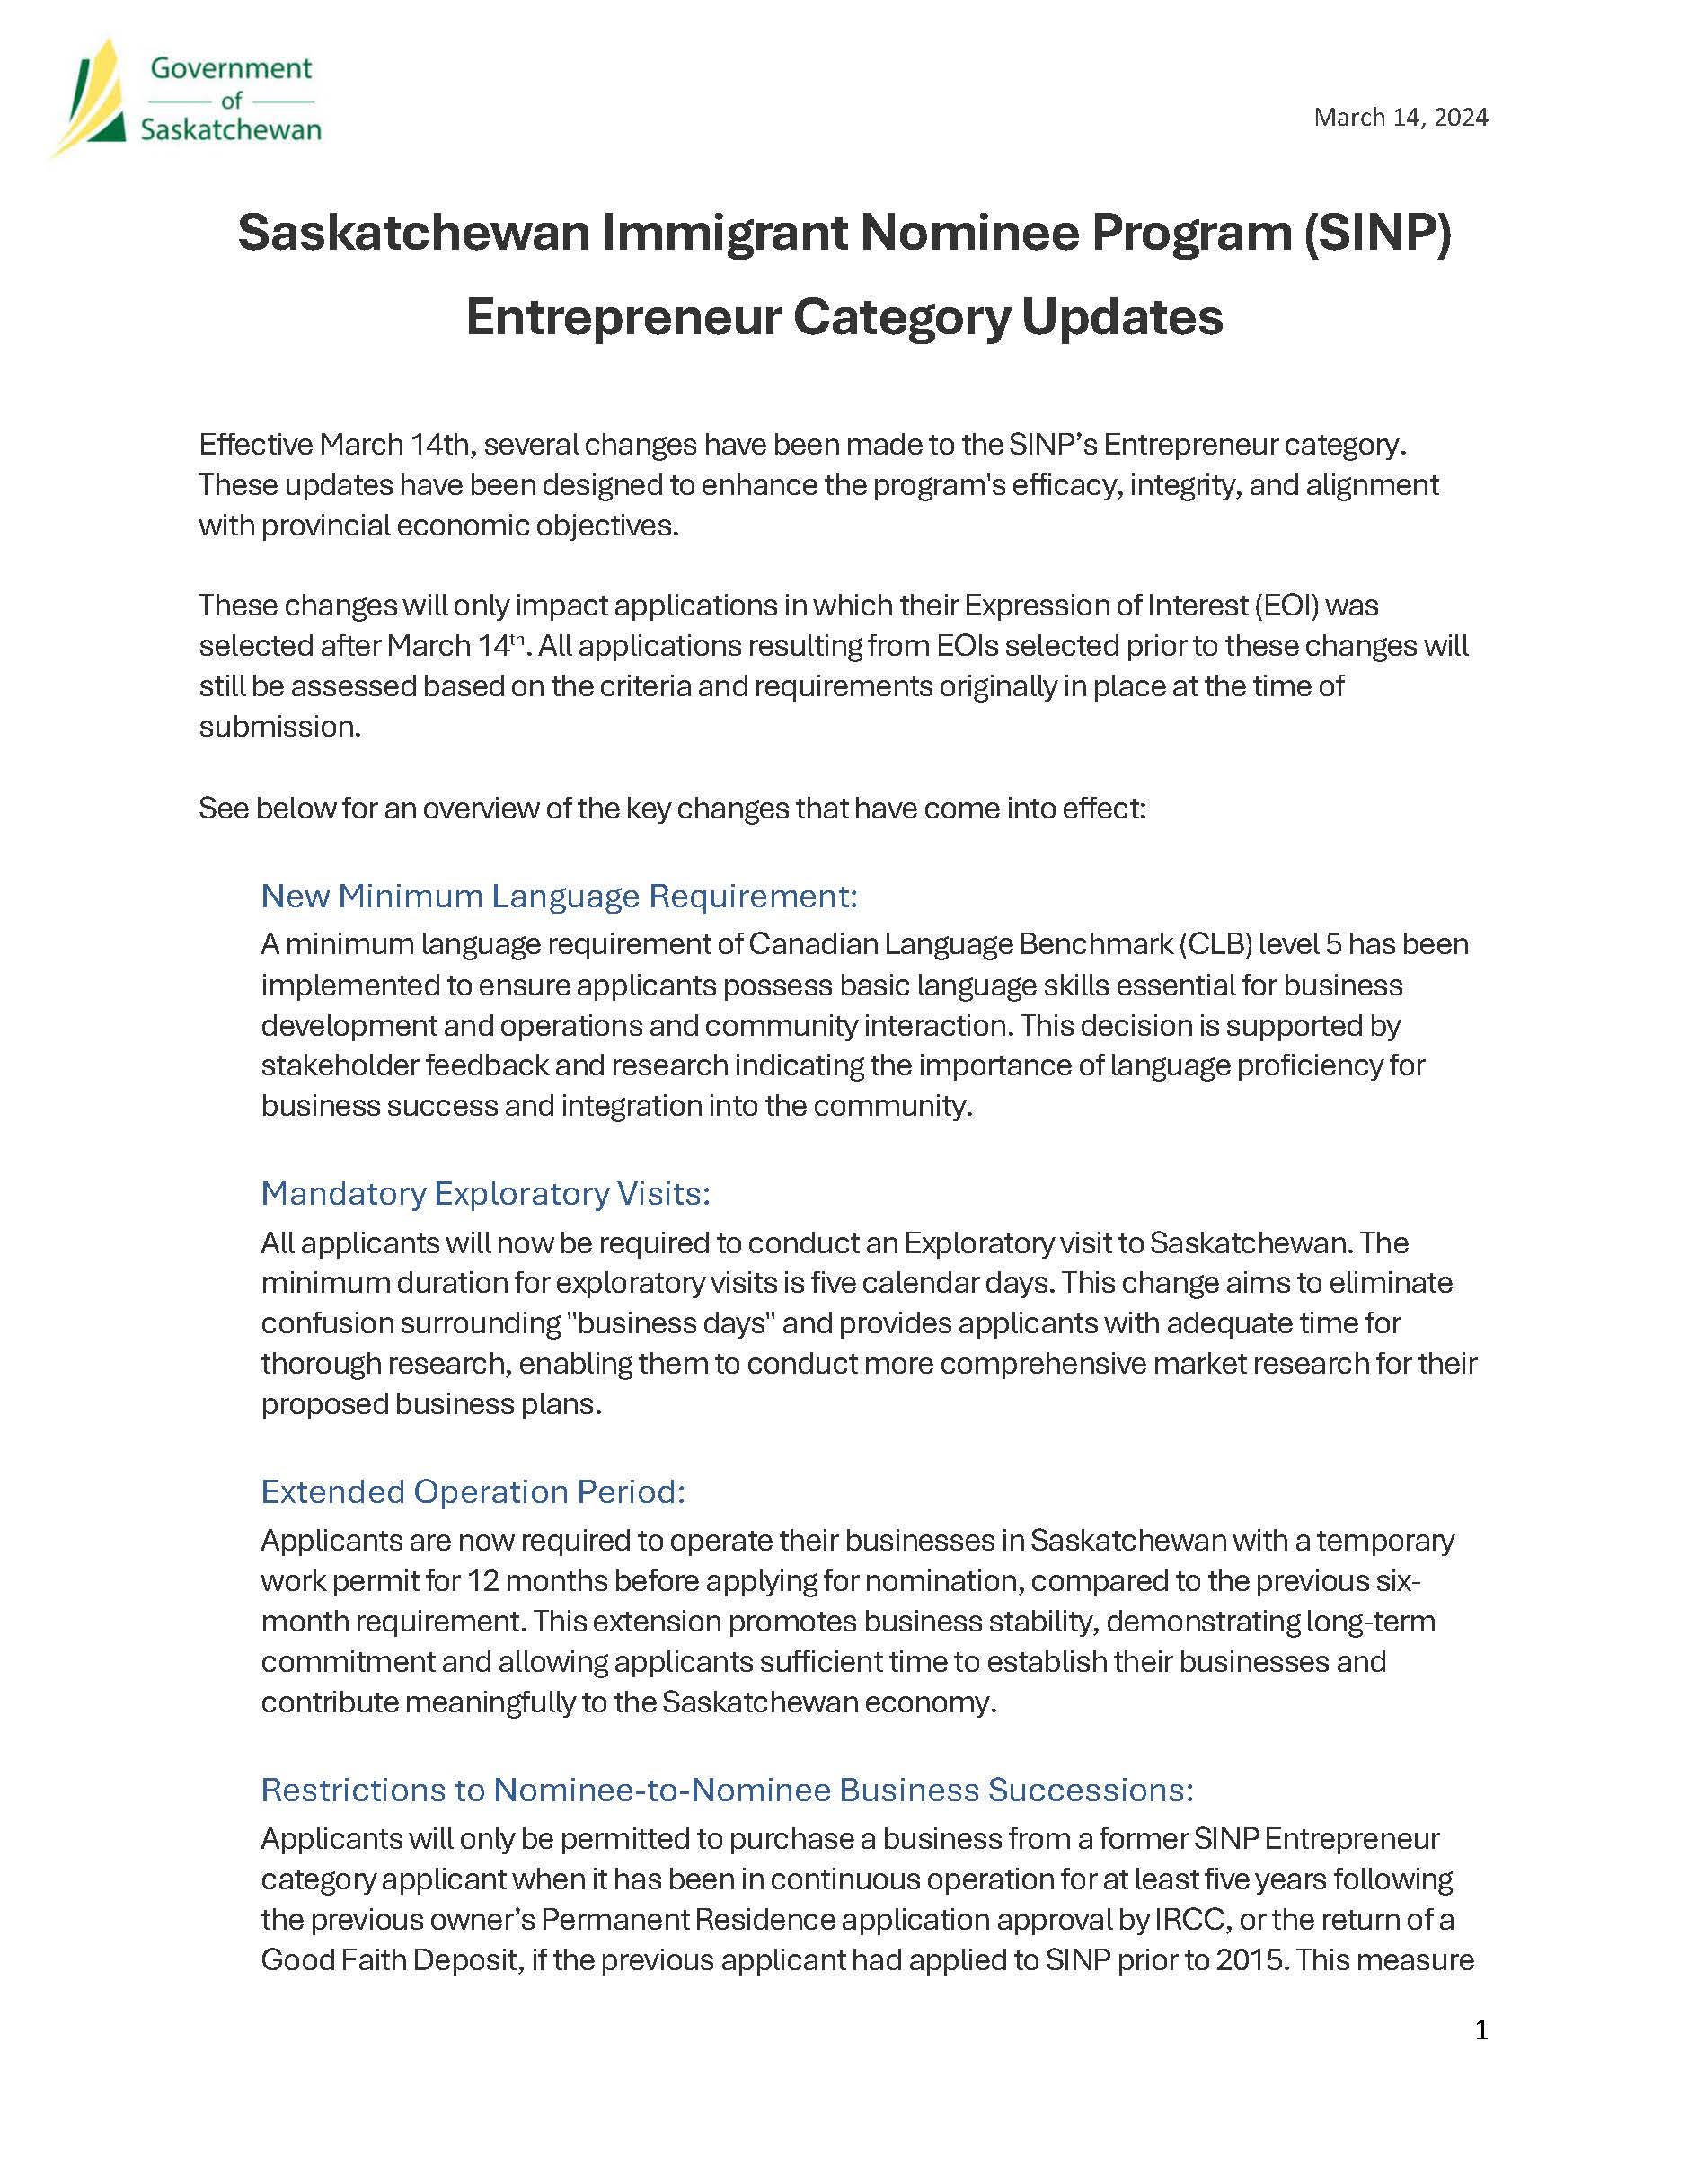 Entrepreneur_Overview_2024_页面_1.jpg